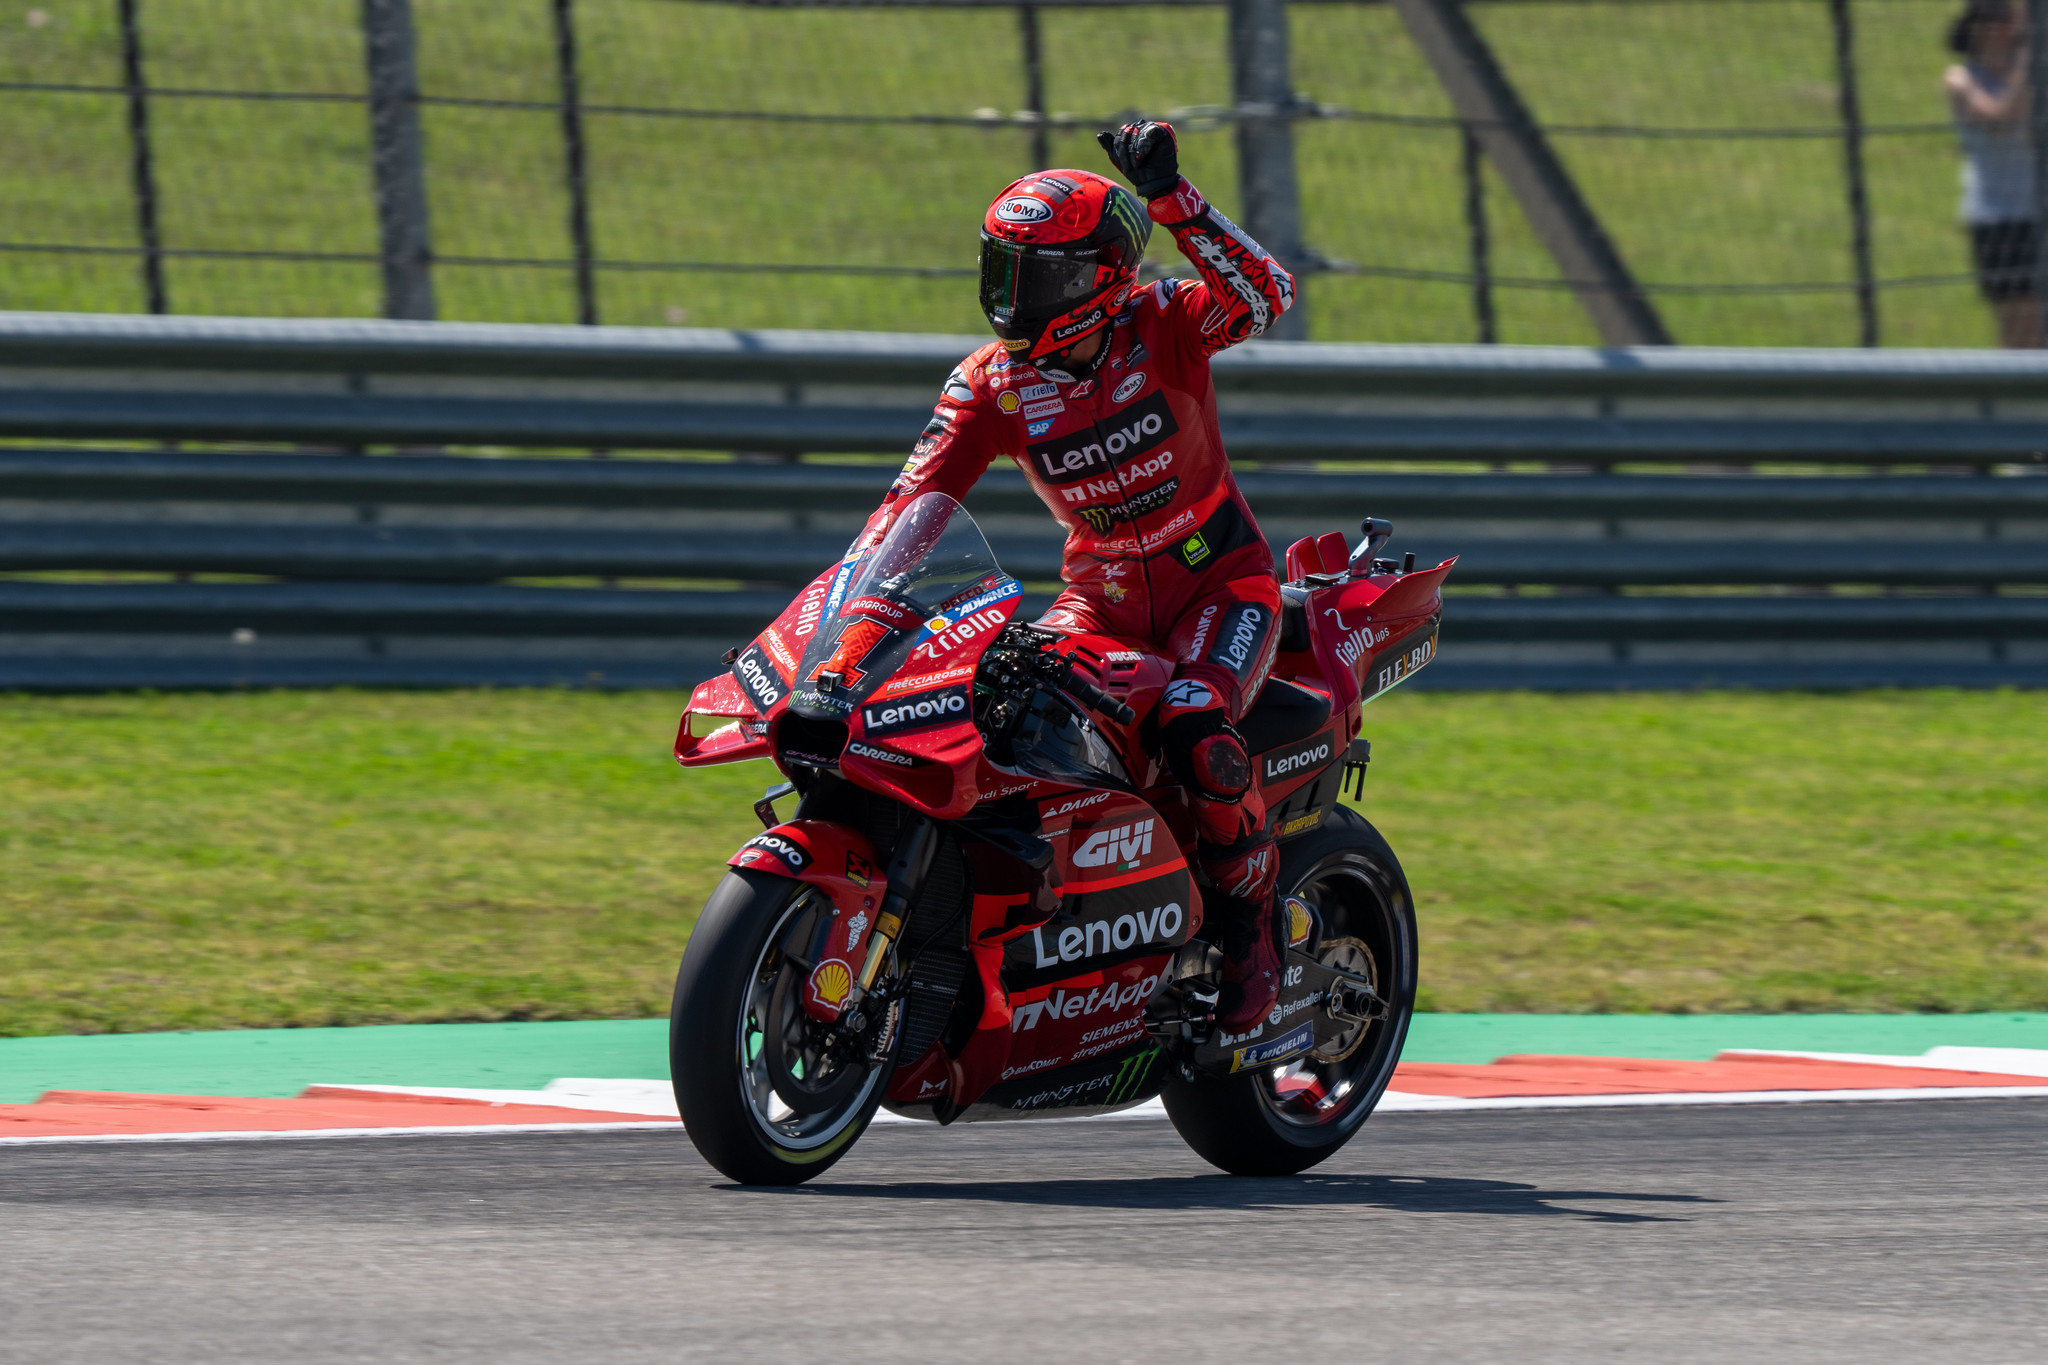 MotoGP Sprint - #1 Francesco Bagnaia - (ITA) - Ducati Lenovo Team - Ducati Desmosedici GP23